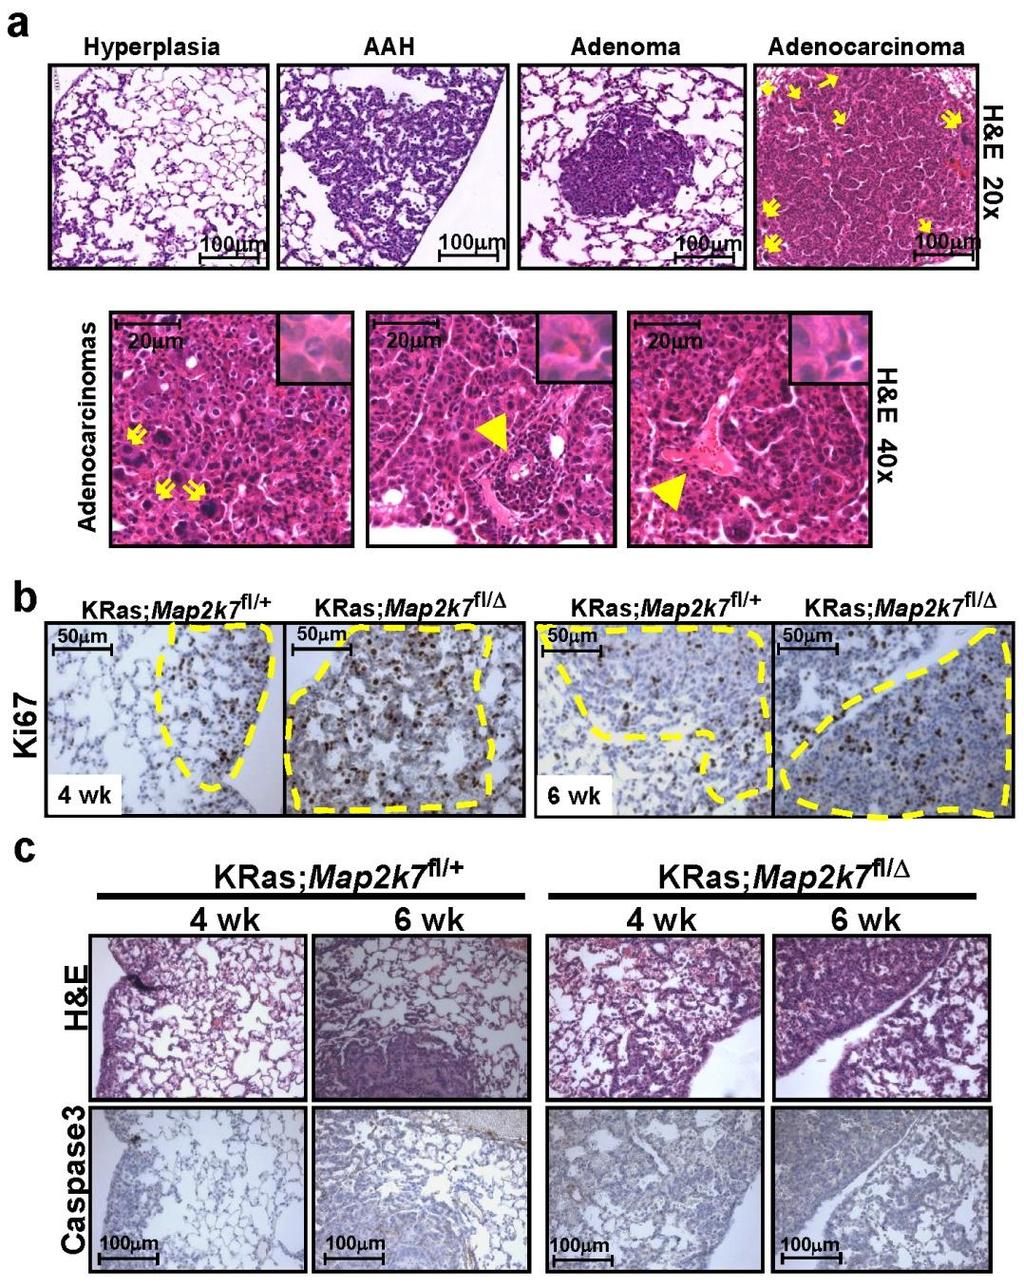 Supplementary Figure 3. Enhanced proliferation in MKK7 mutant lung tumors.